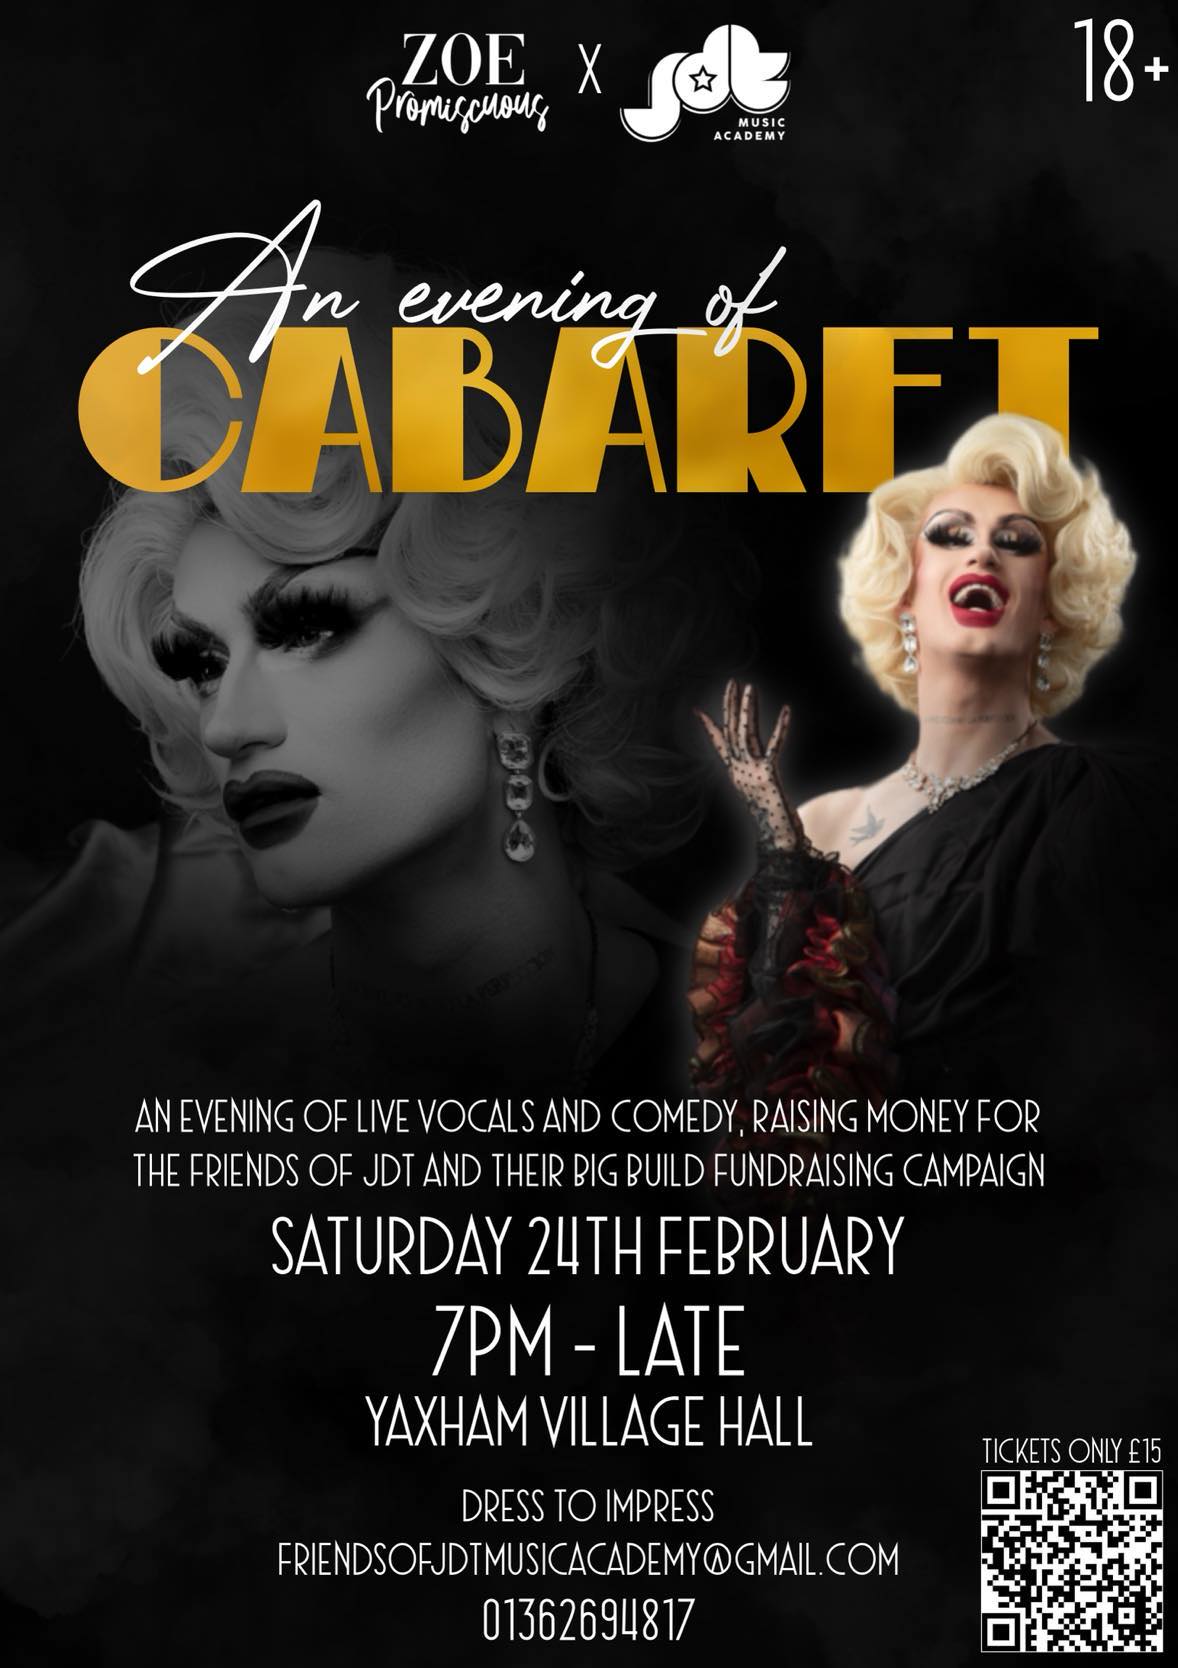 An Evening of Cabaret – Yaxham Village Hall, 24th February